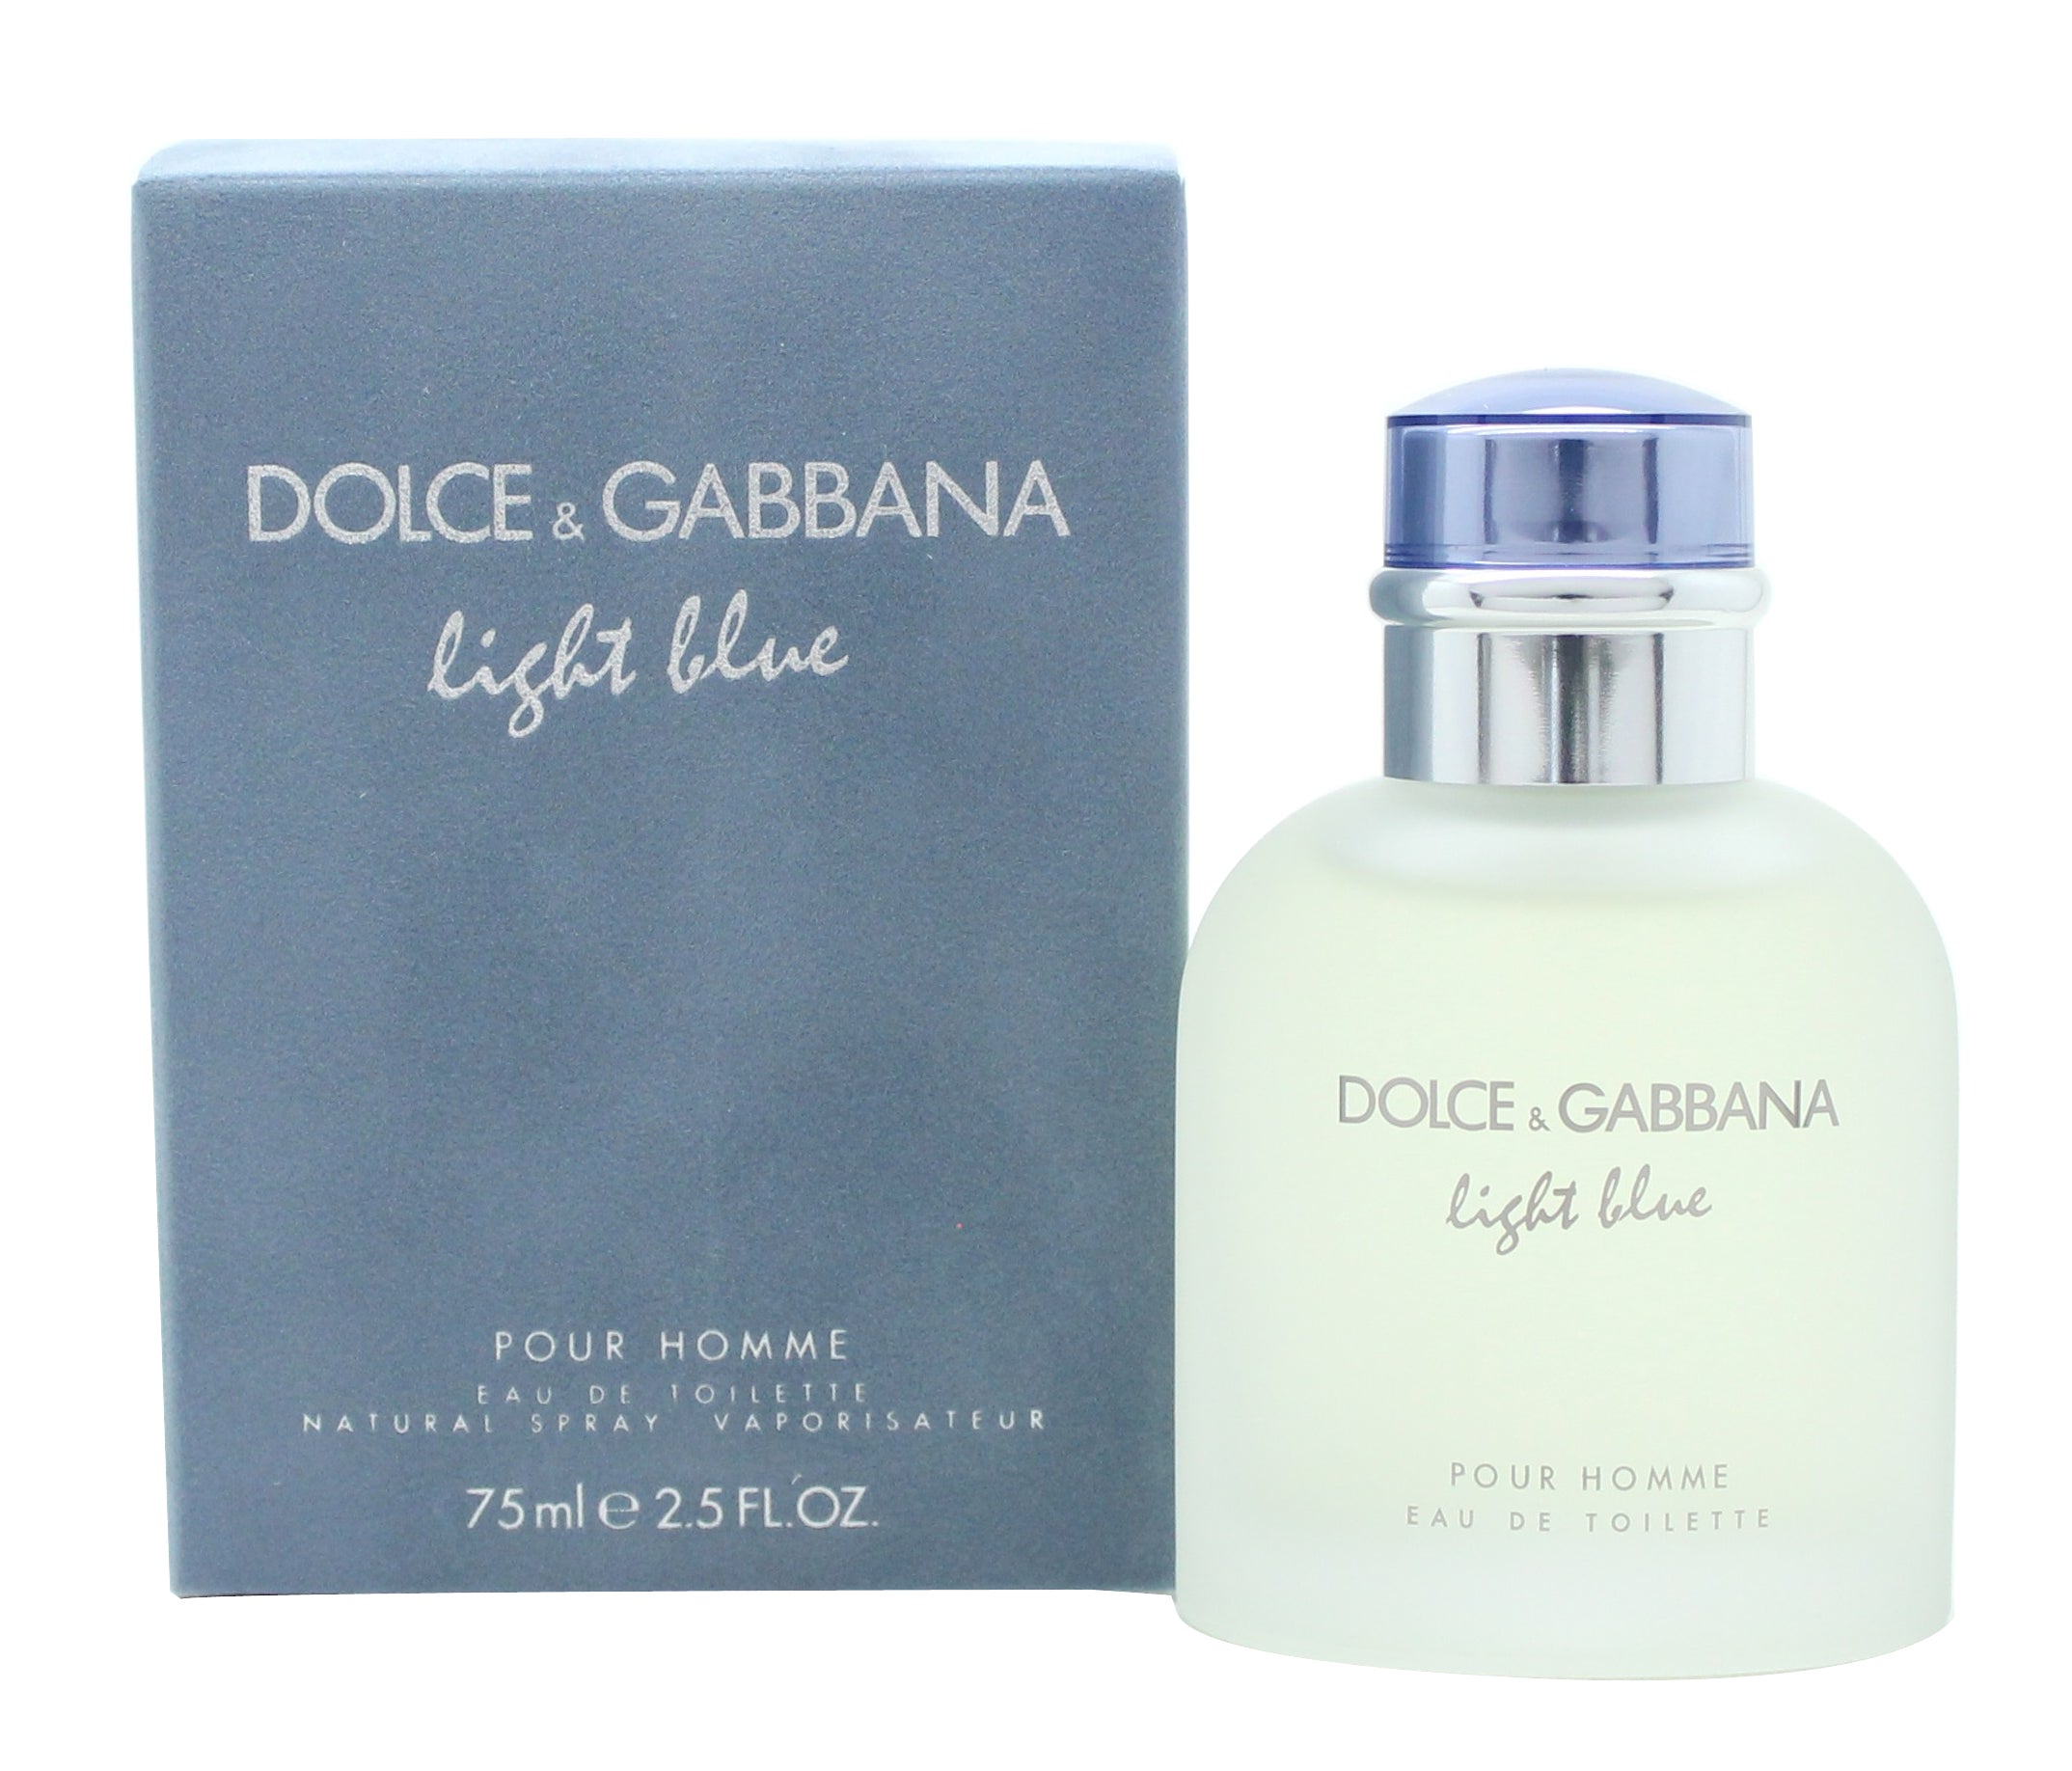 View Dolce Gabbana Light Blue Eau de Toilette 75ml Spray information